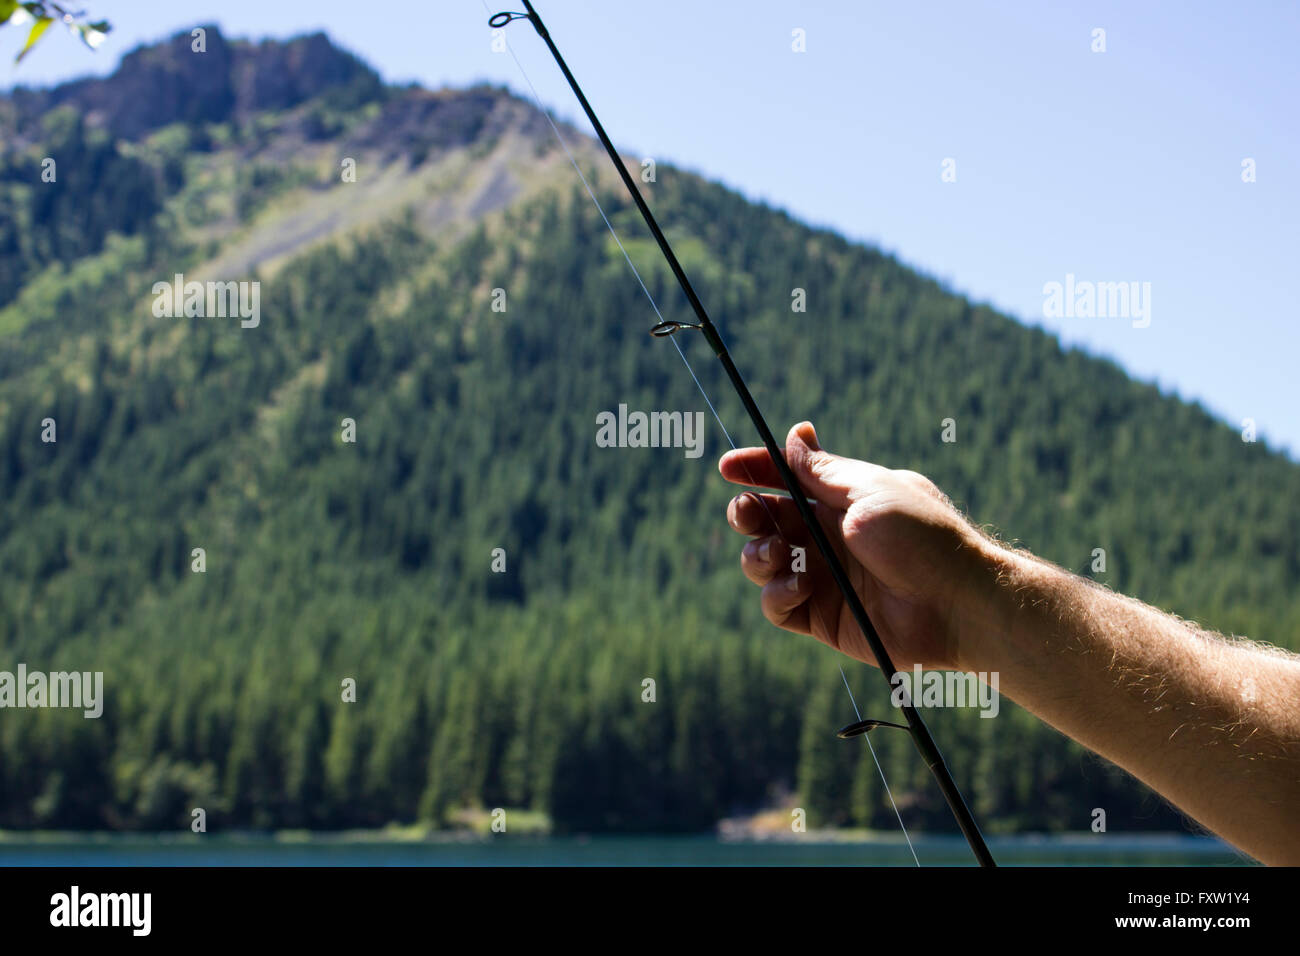 https://c8.alamy.com/comp/FXW1Y4/manly-hand-on-fishing-pole-FXW1Y4.jpg